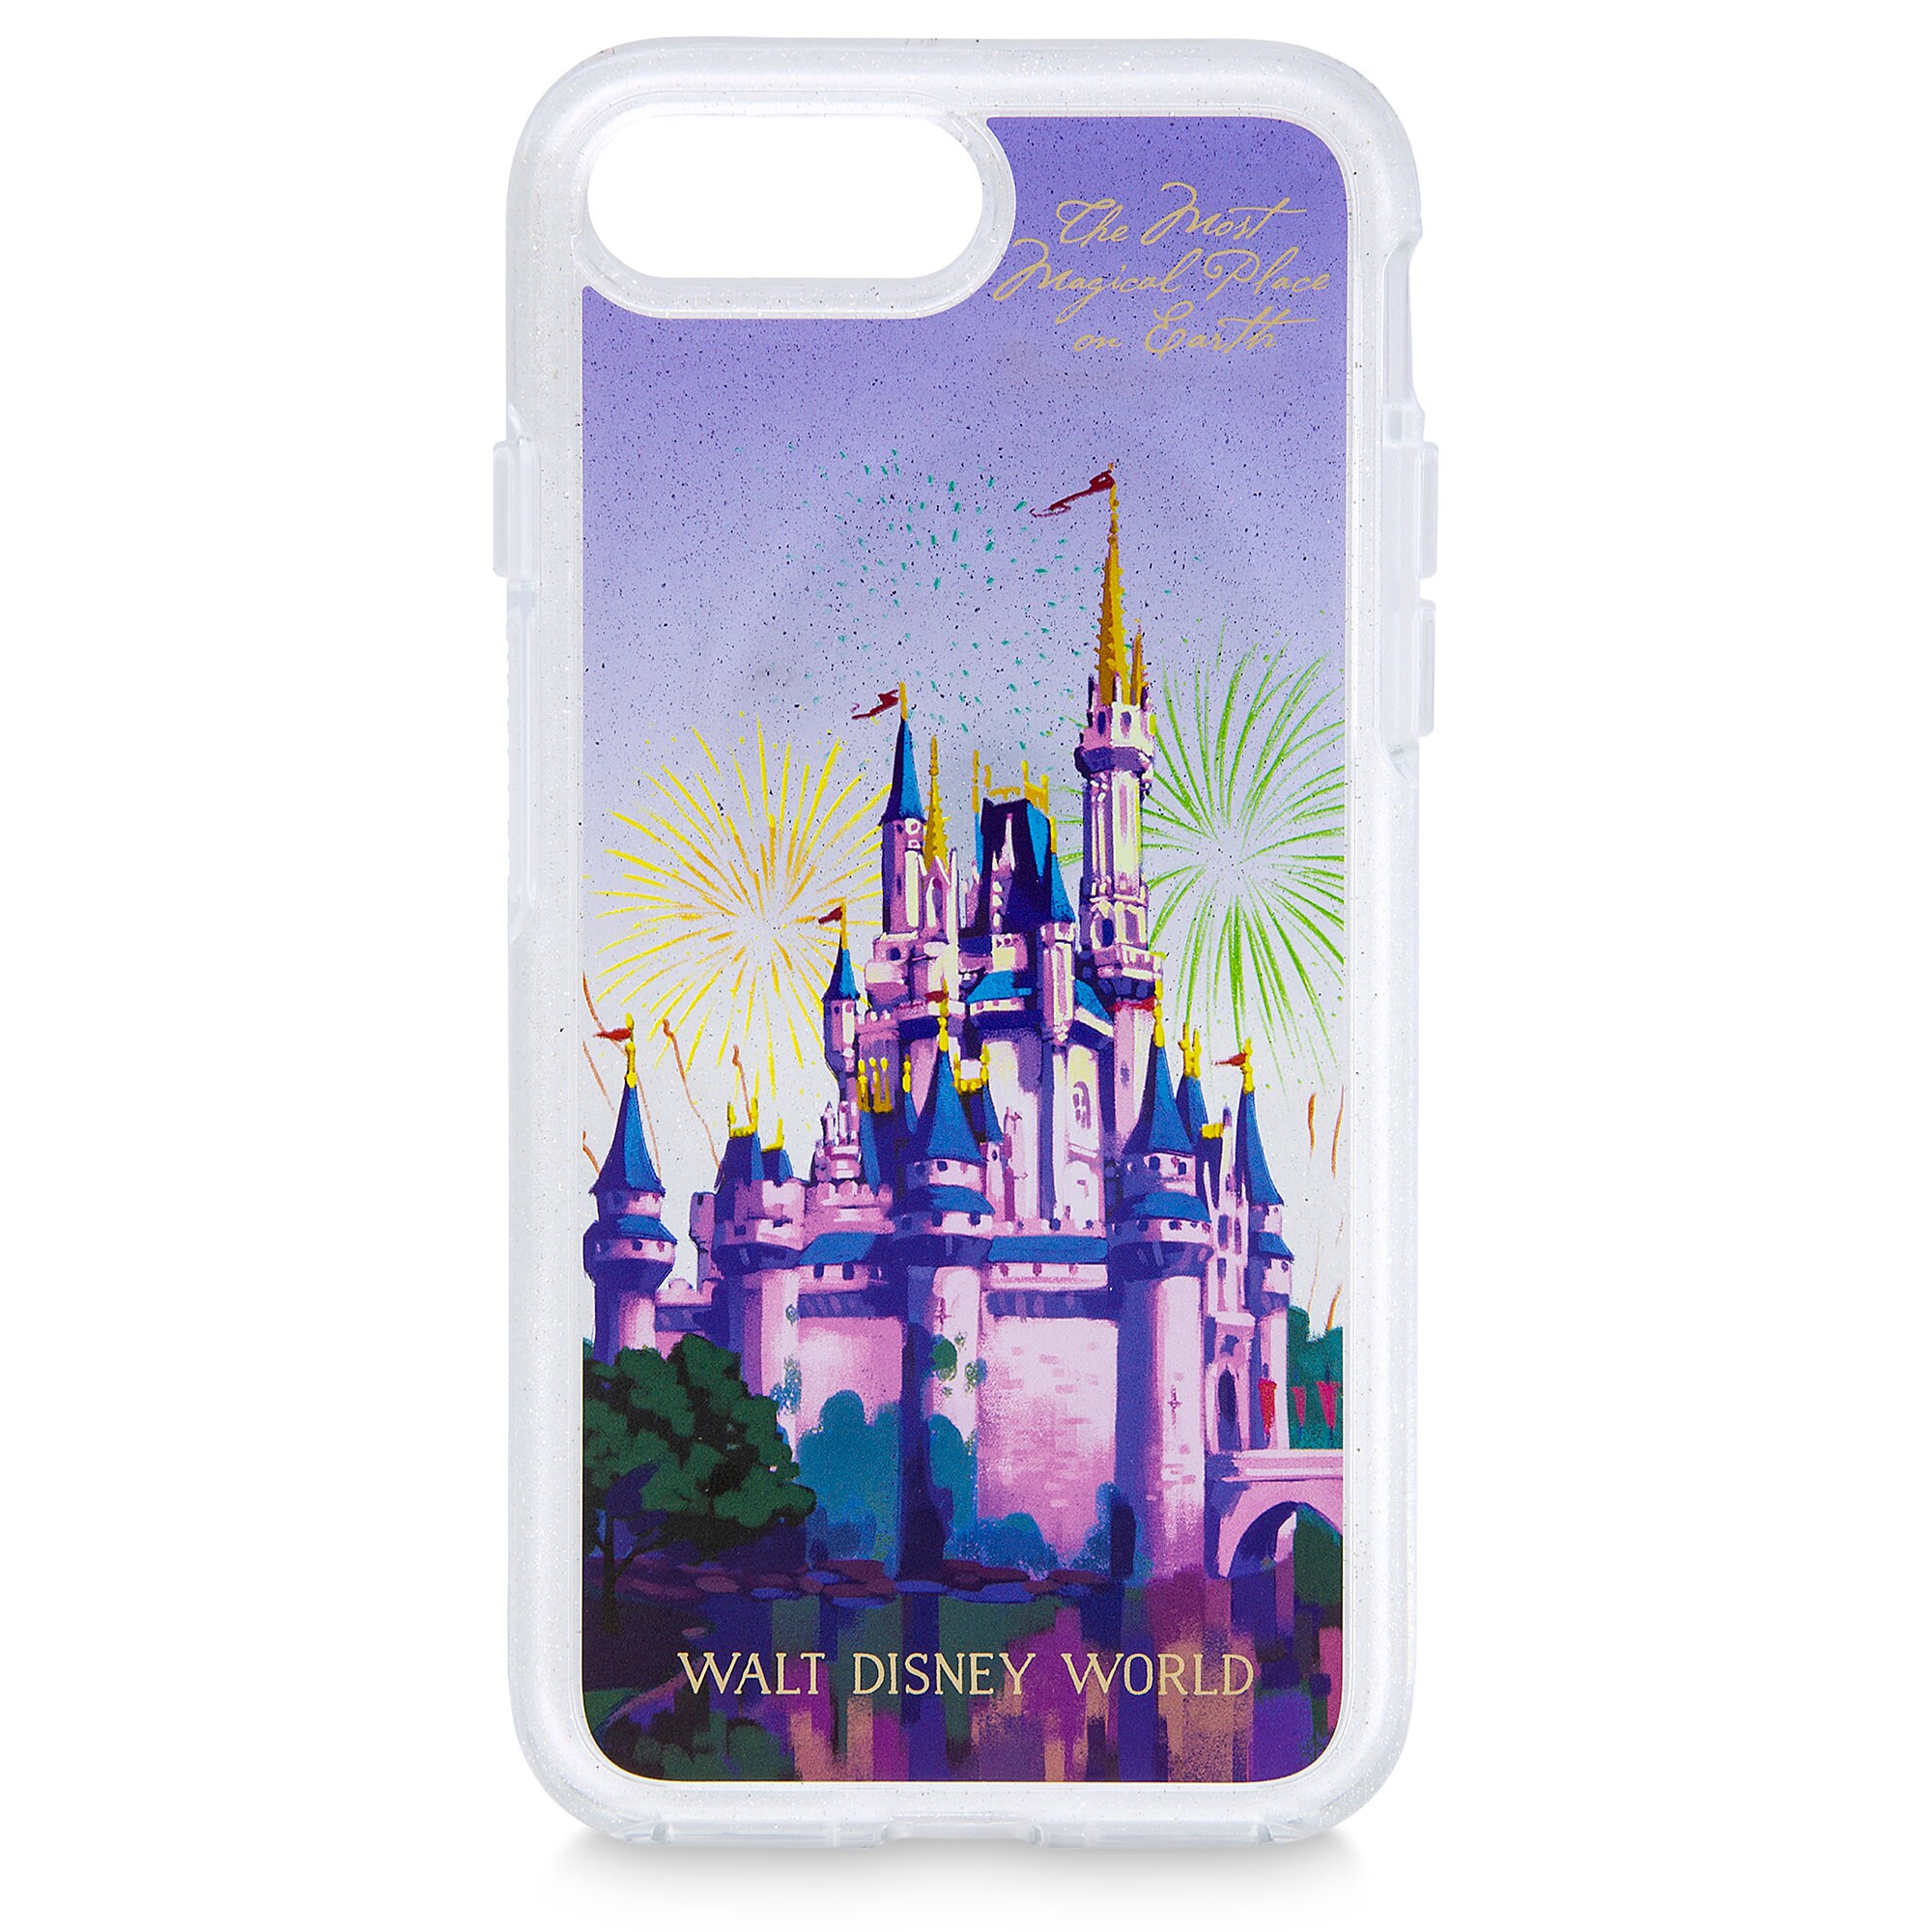 Cinderella Castle iPhone 8 Plus Case by OtterBox - Walt Disney World